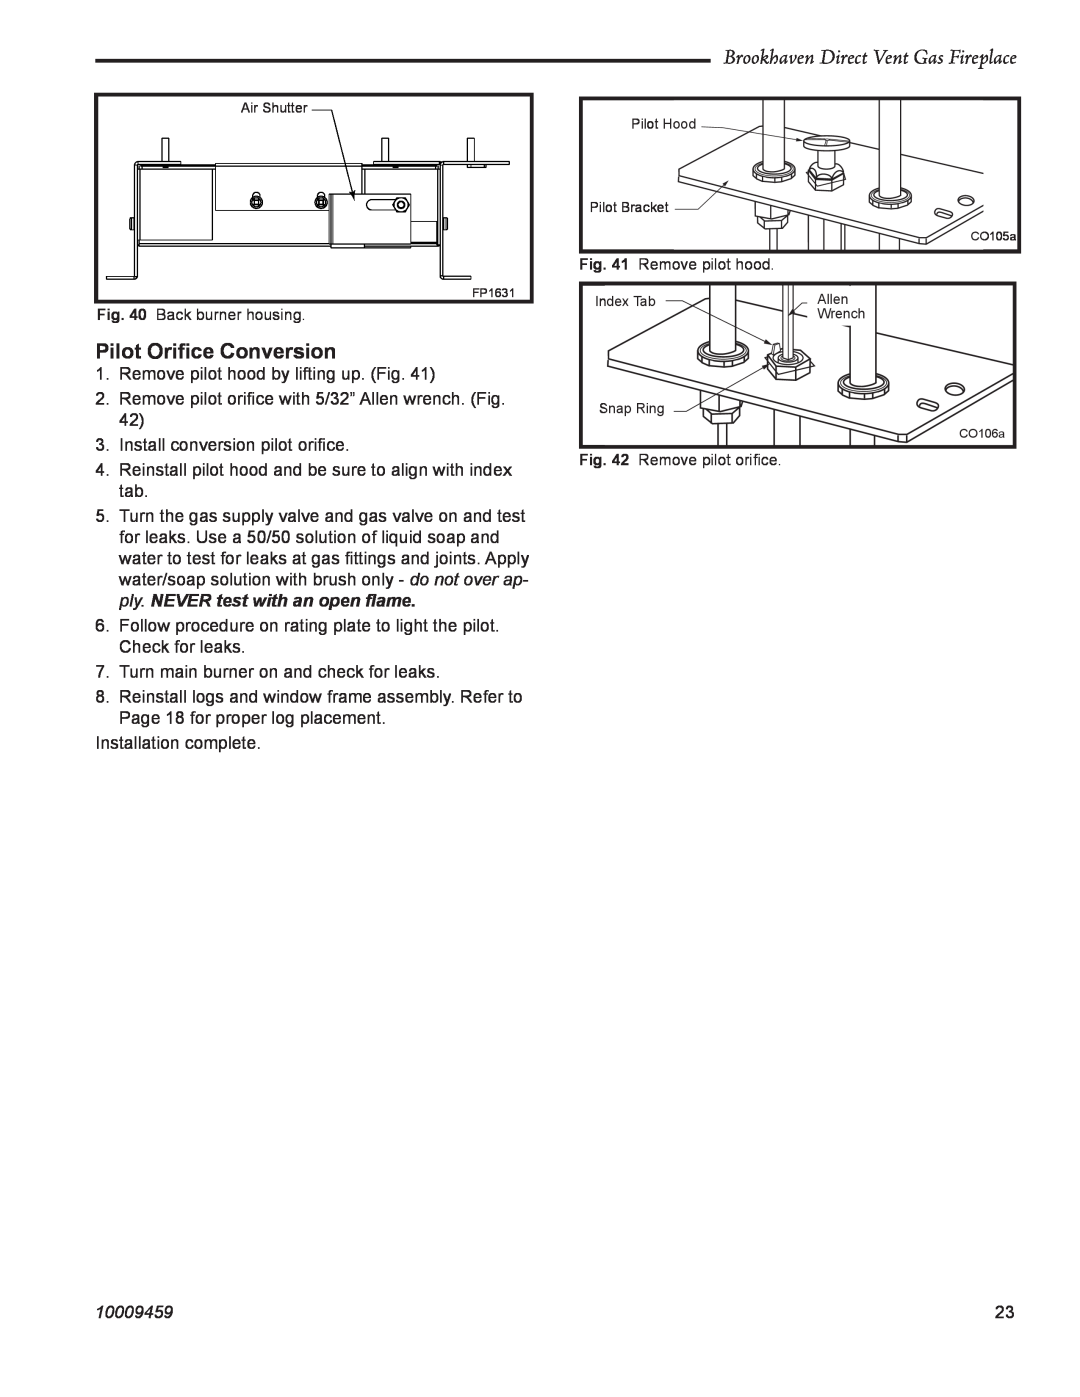 Vermont Casting 20DVT installation instructions Pilot Oriﬁce Conversion, Brookhaven Direct Vent Gas Fireplace, 10009459 